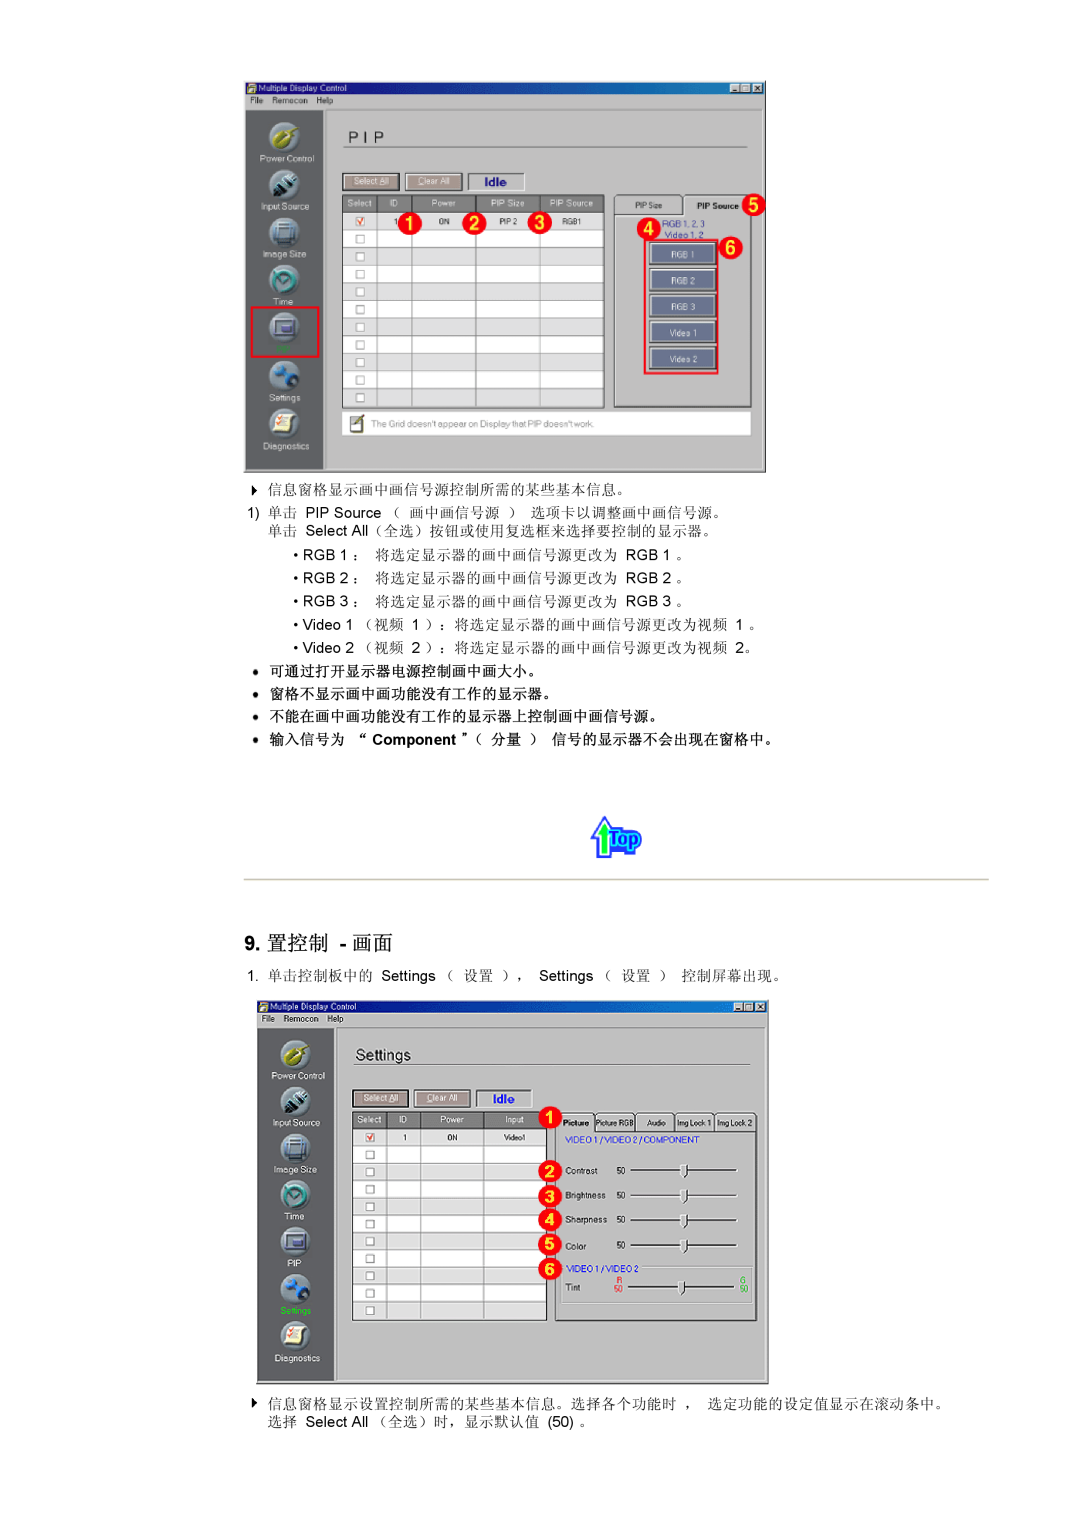 Samsung CK40PSNBG/EDC, CK40BSNS/EDC manual 9. 置控制 - 画面, 可通过打开显示器电源控制画中画大小。 窗格不显示画中画功能没有工作的显示器。 不能在画中画功能没有工作的显示器上控制画中画信号源。 